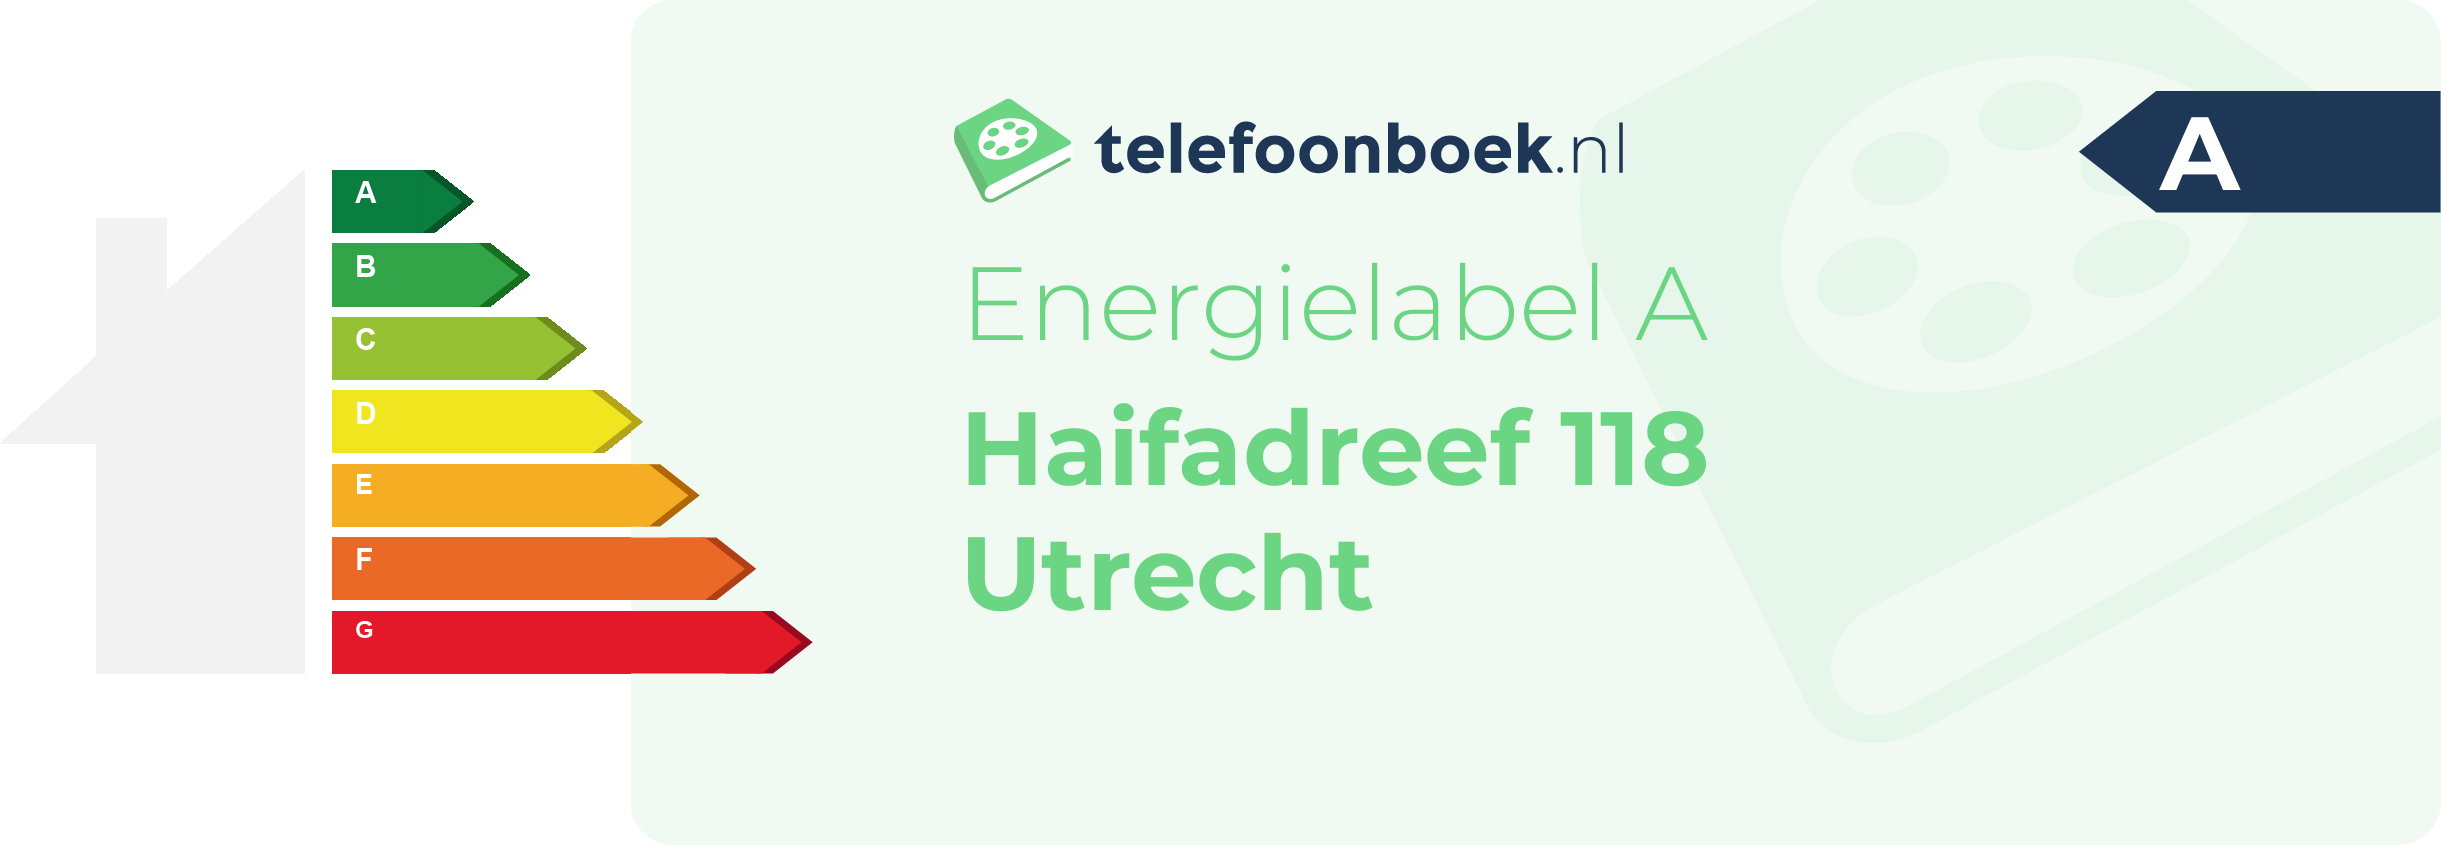 Energielabel Haifadreef 118 Utrecht